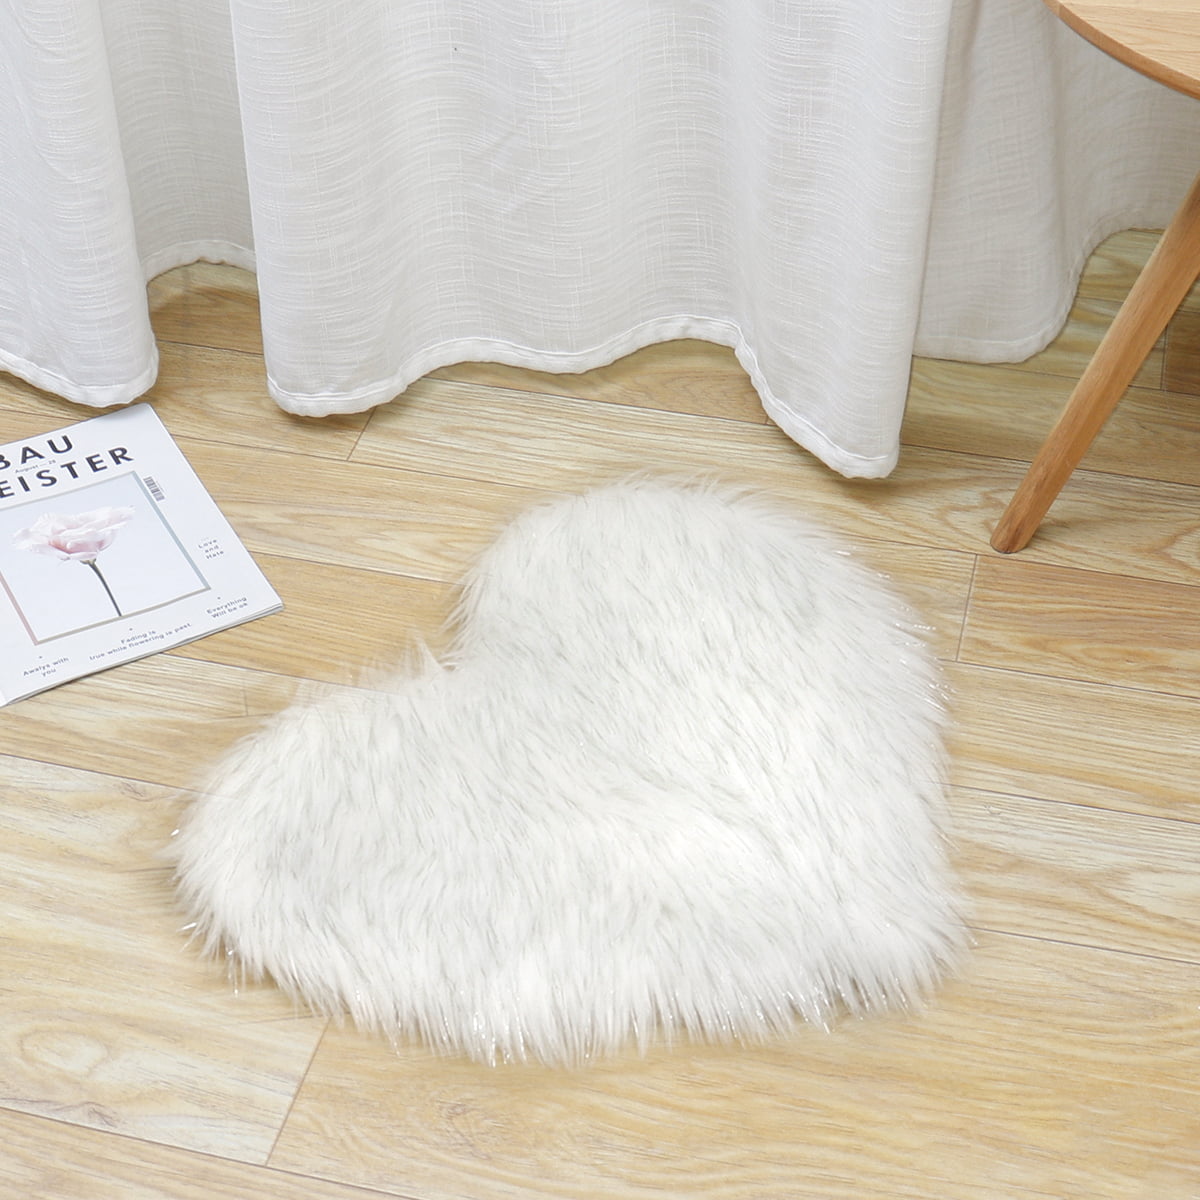 Plush Rugs Heart Shape Anti-Slip Carpet Shaggy Area-Rug Room Door Mat Home Decor